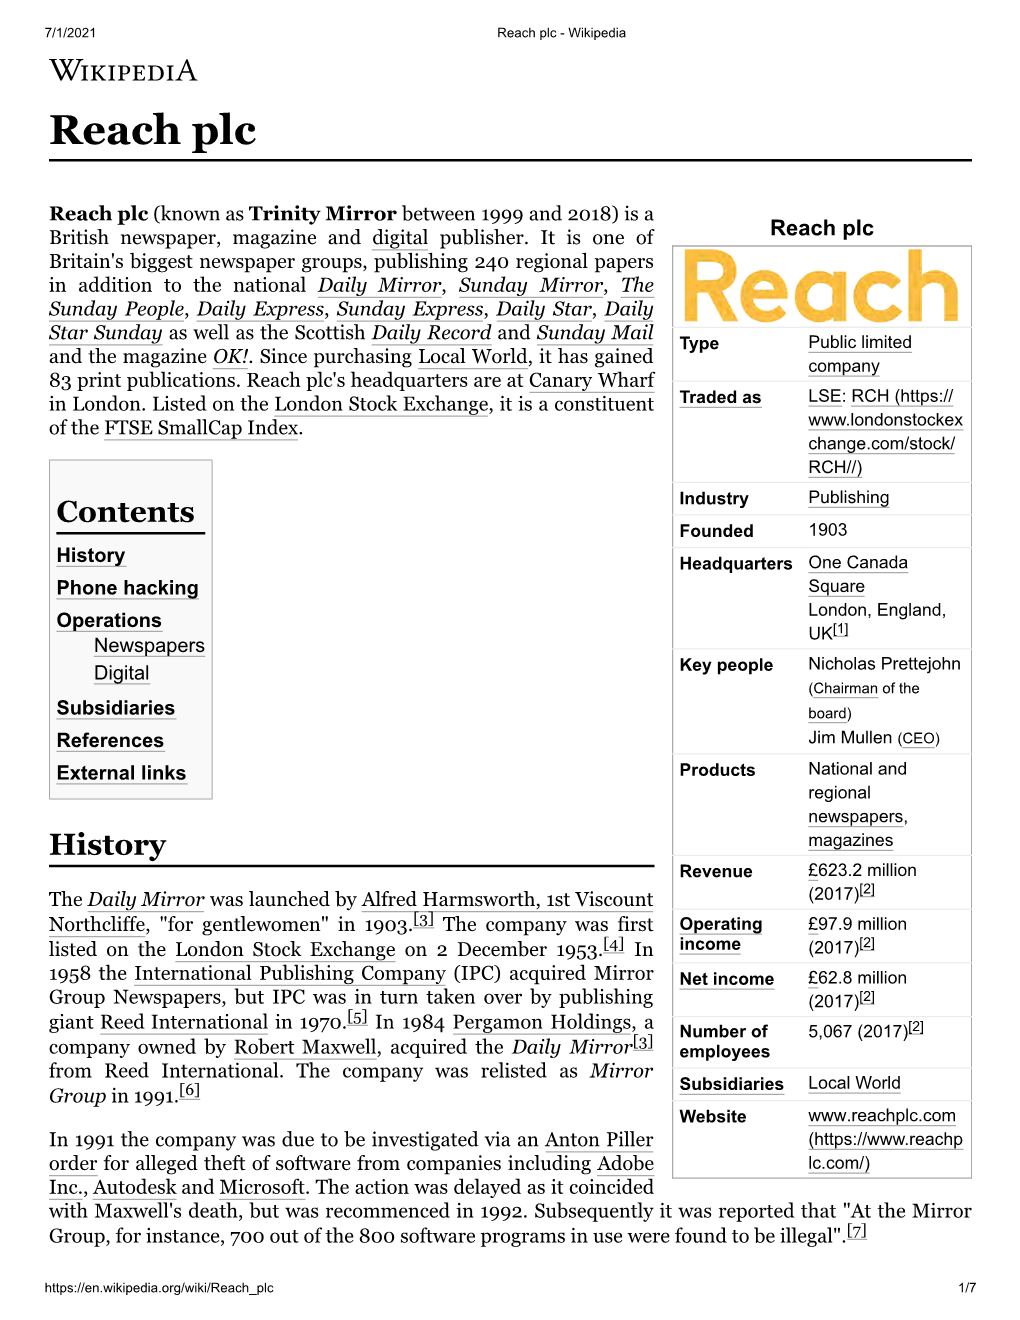 Reach Plc - Wikipedia